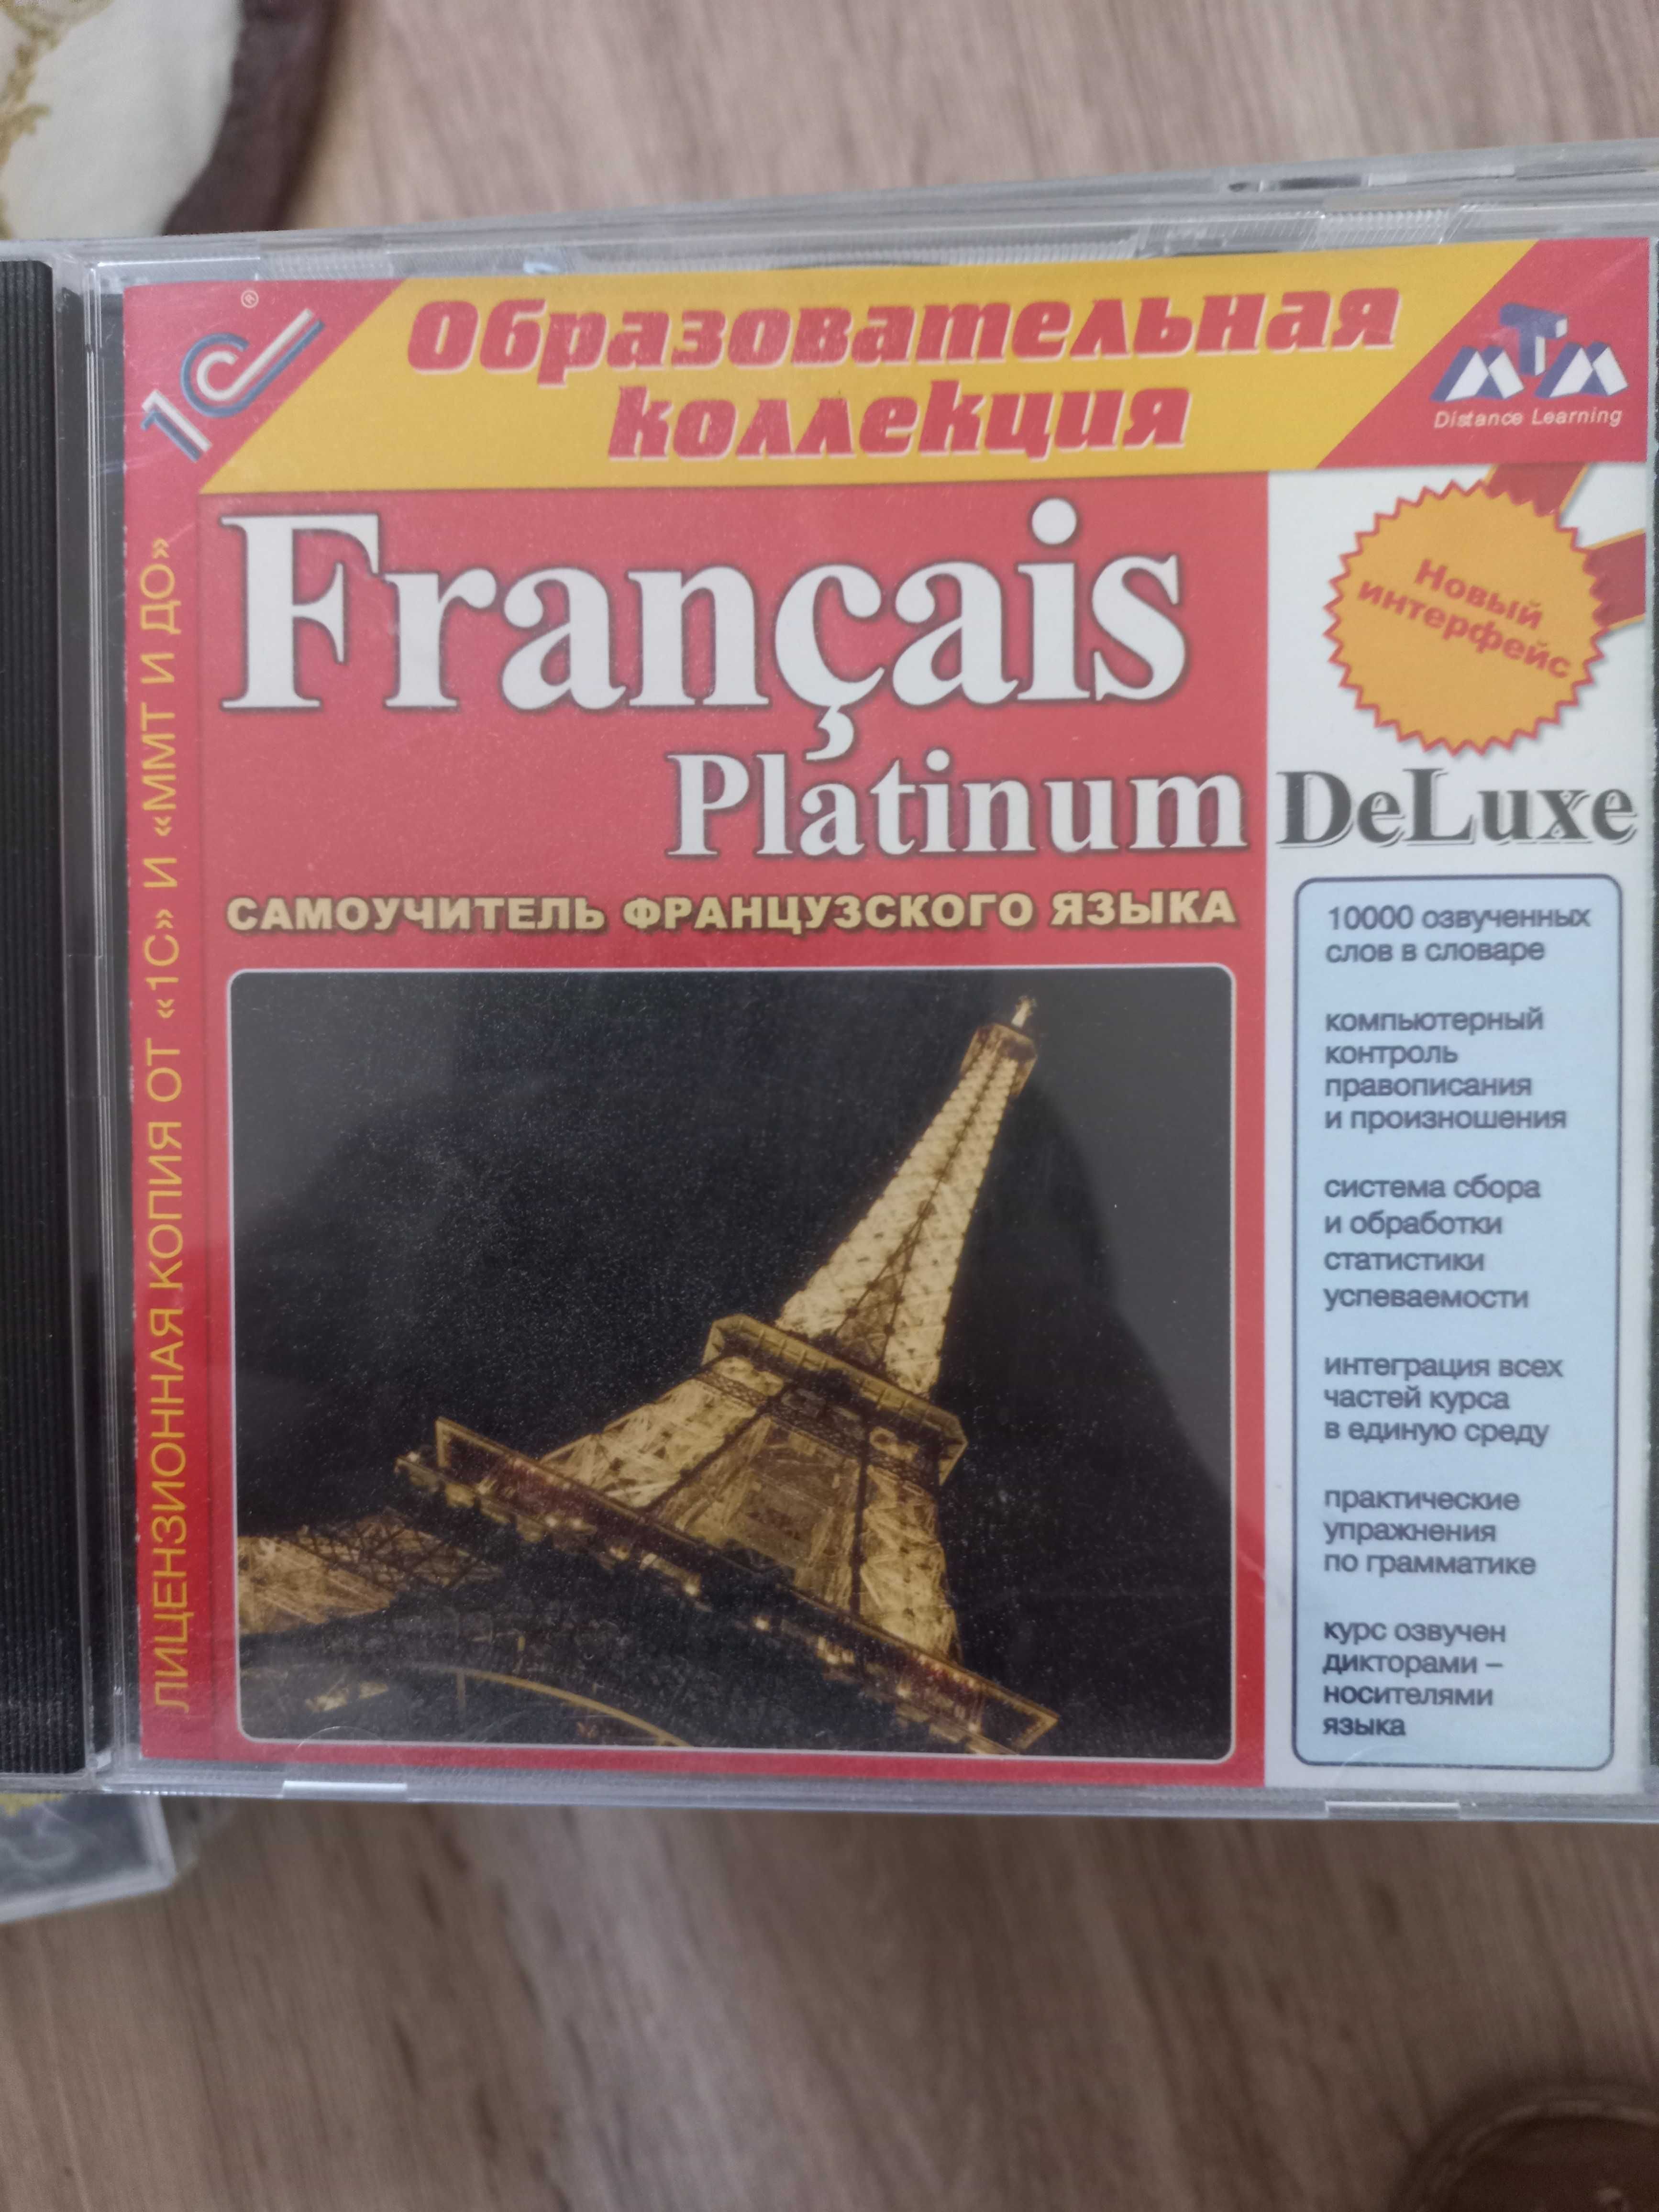 CD-ROM. Francais Platinum DeLuxe. Самоучитель французского языка